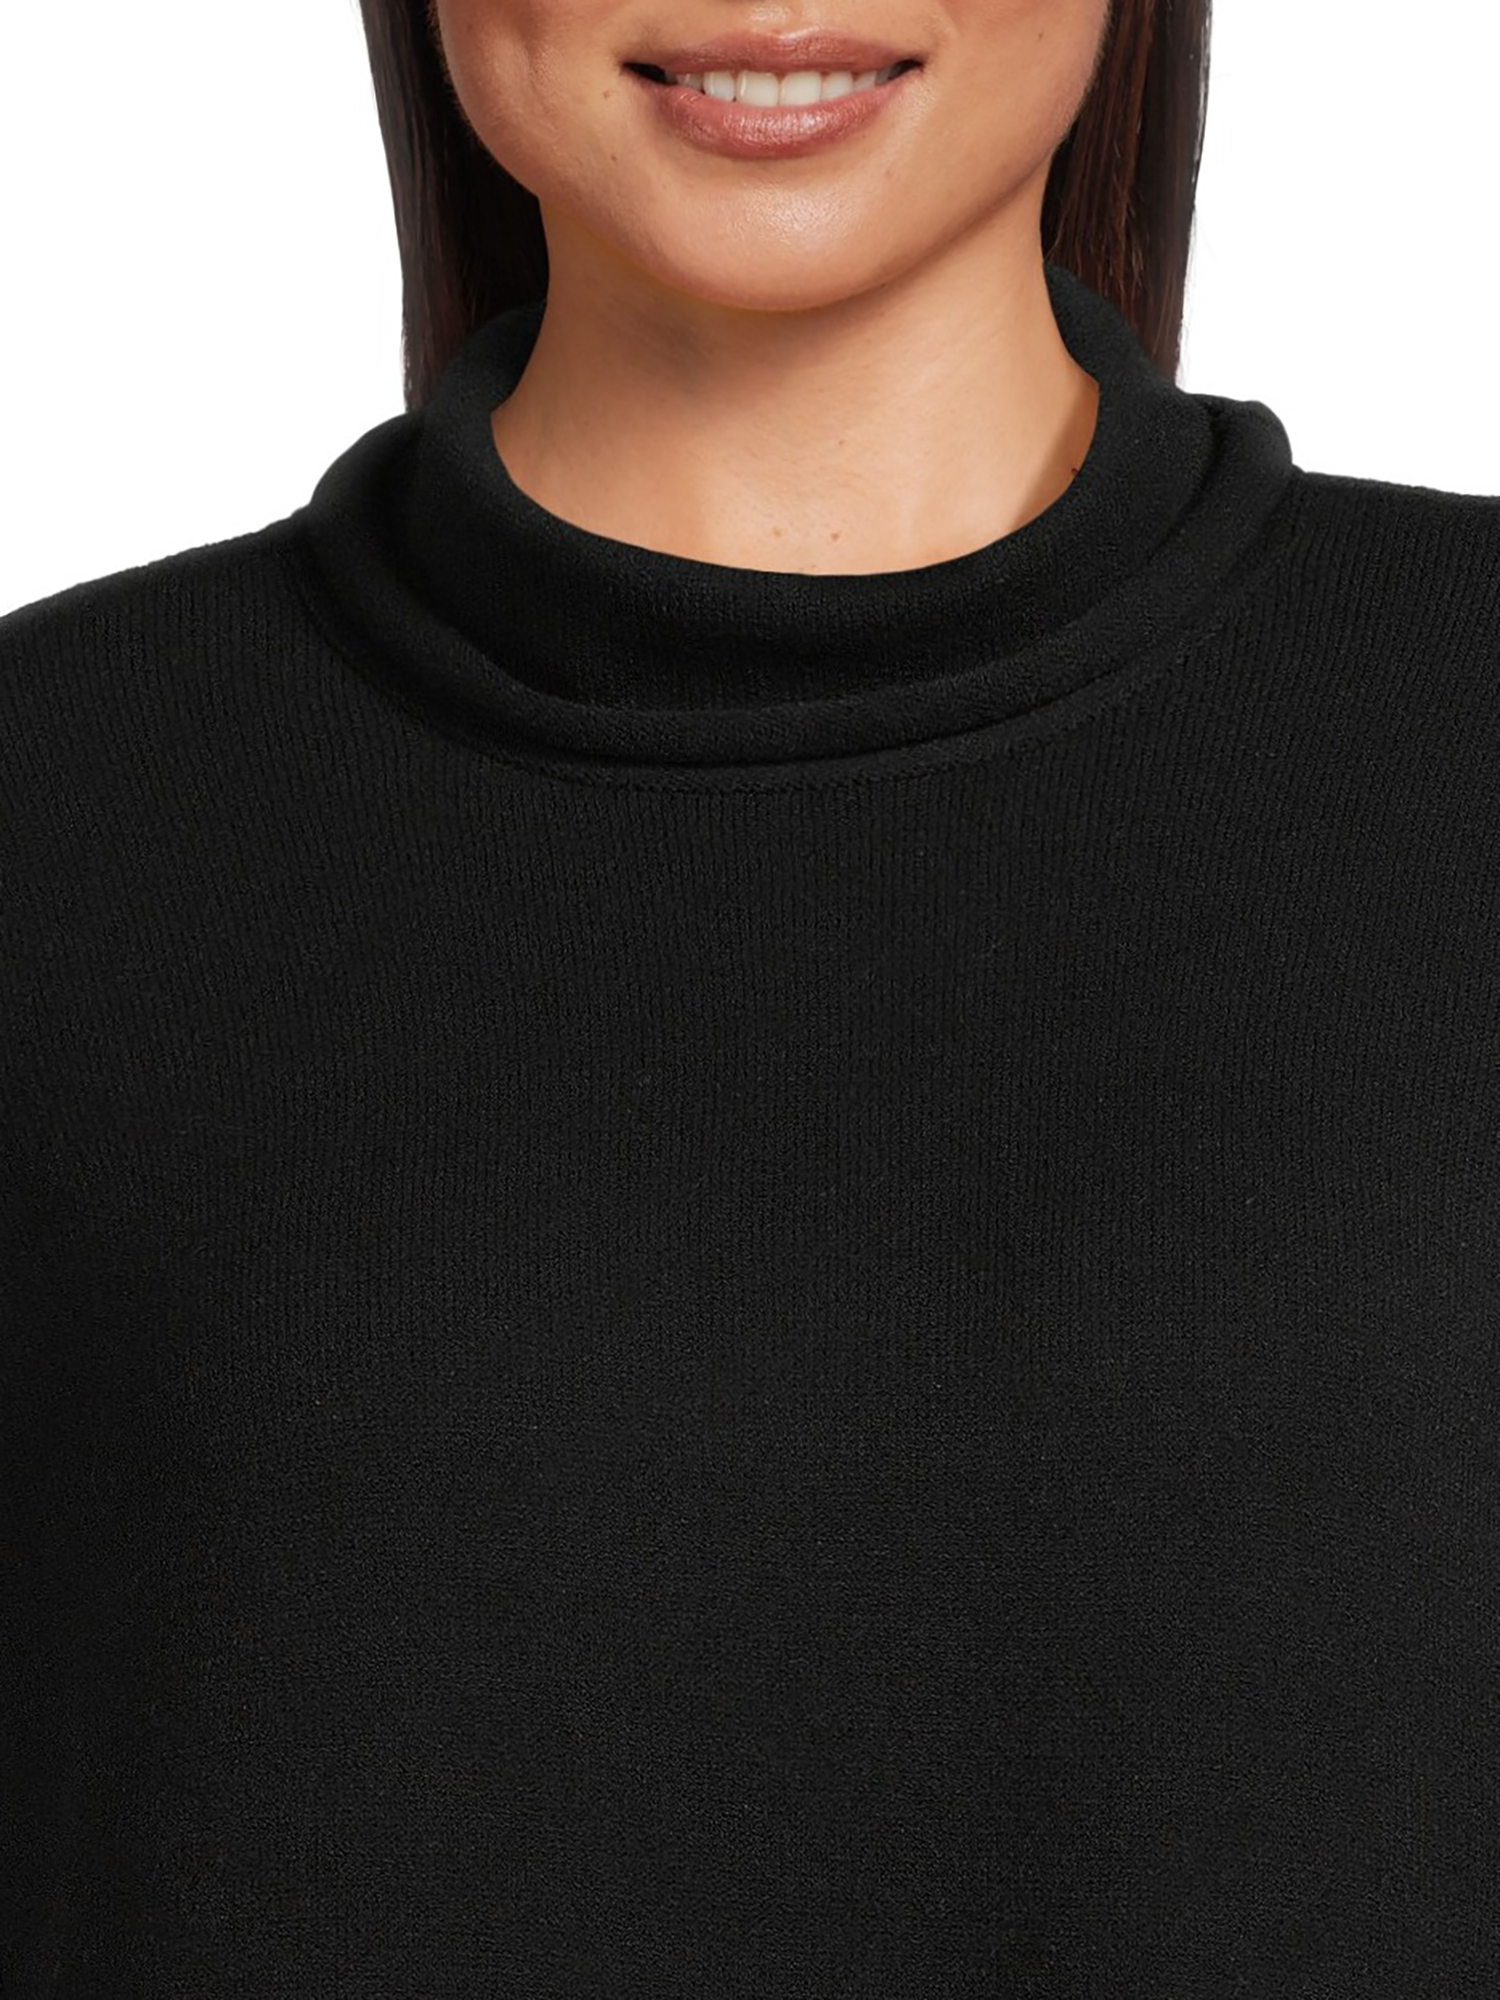 Terra & Sky Women's Plus Size Turtleneck Tunic Length Sweater Dress - image 4 of 5